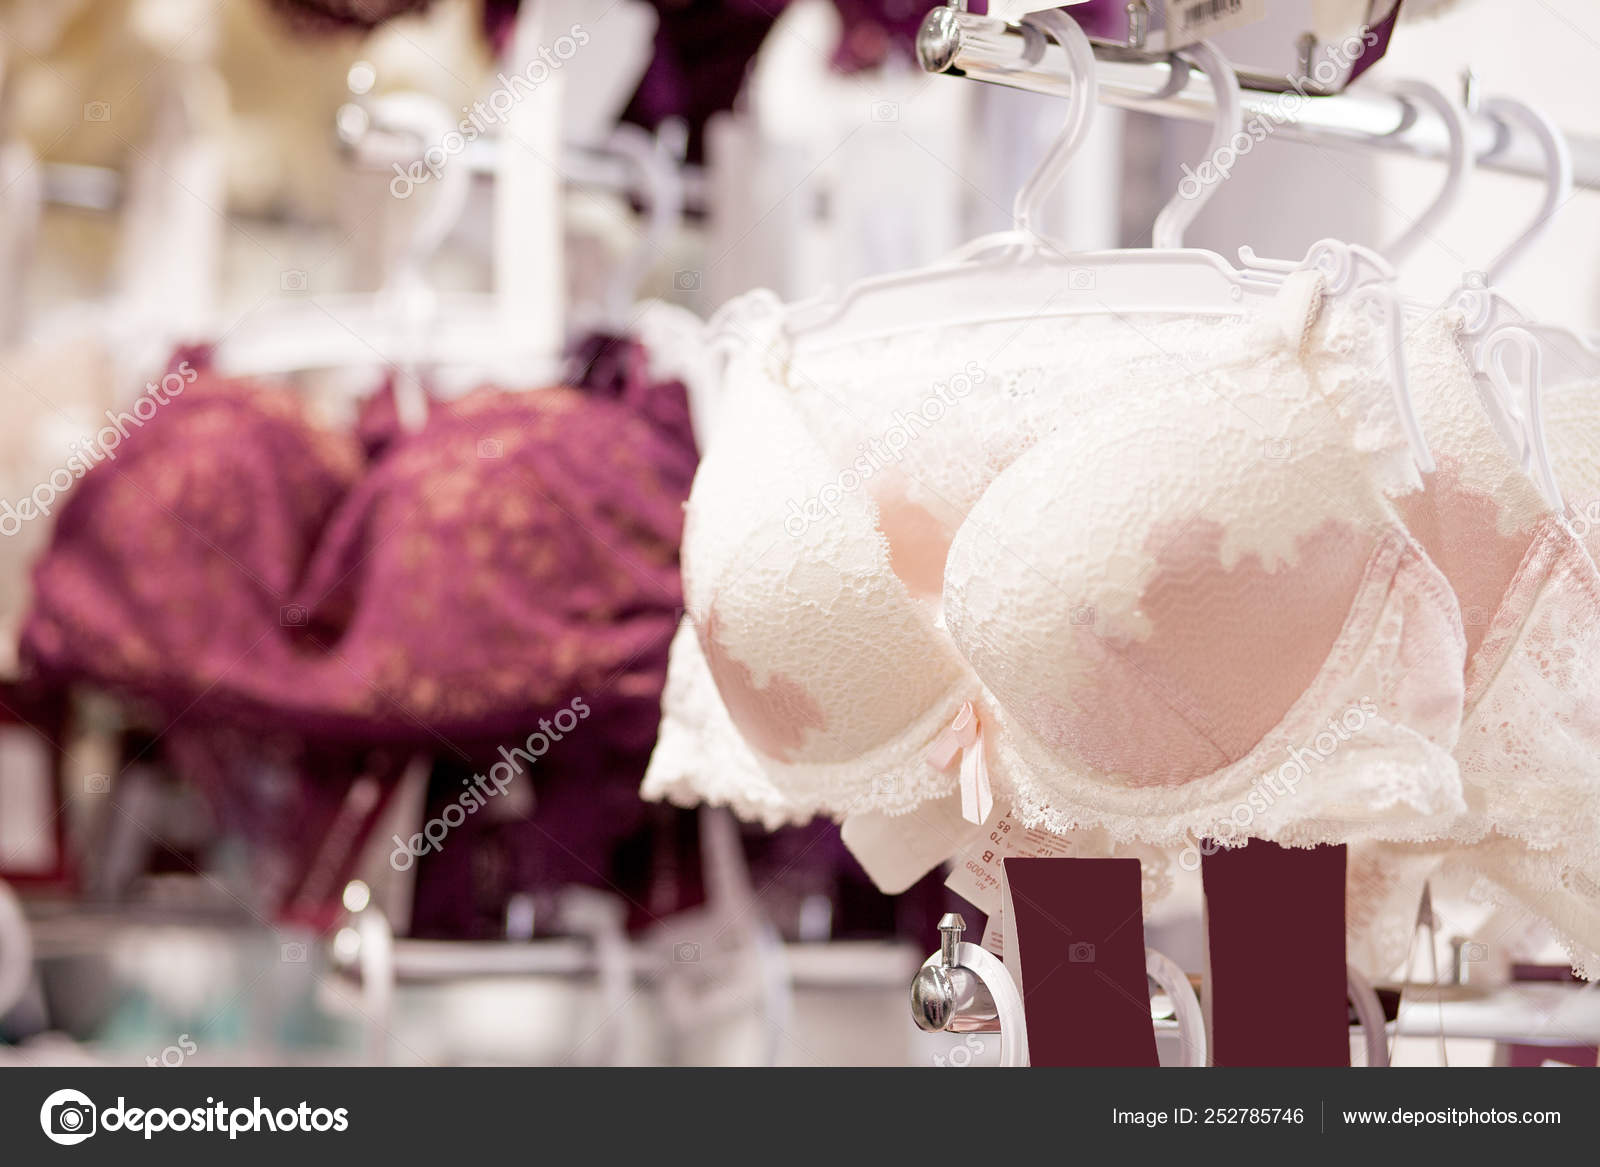 Women's bras for sale in market. Vareity of bra hanging in